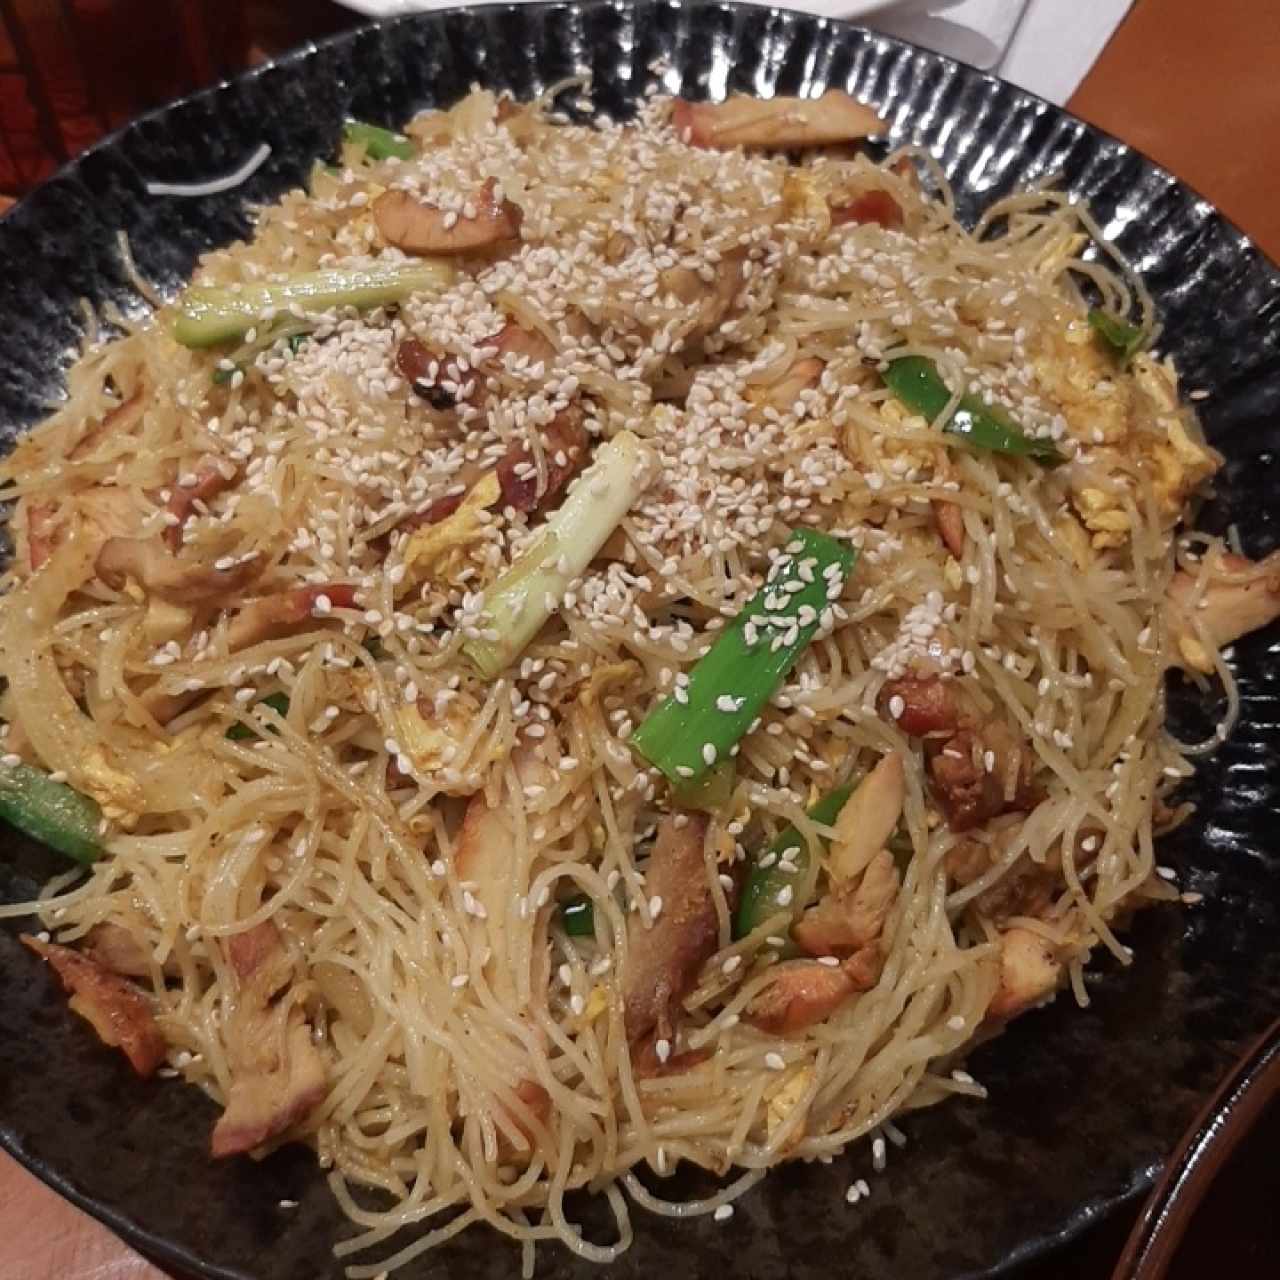 Xingzhou Style Stir Rice Noodles